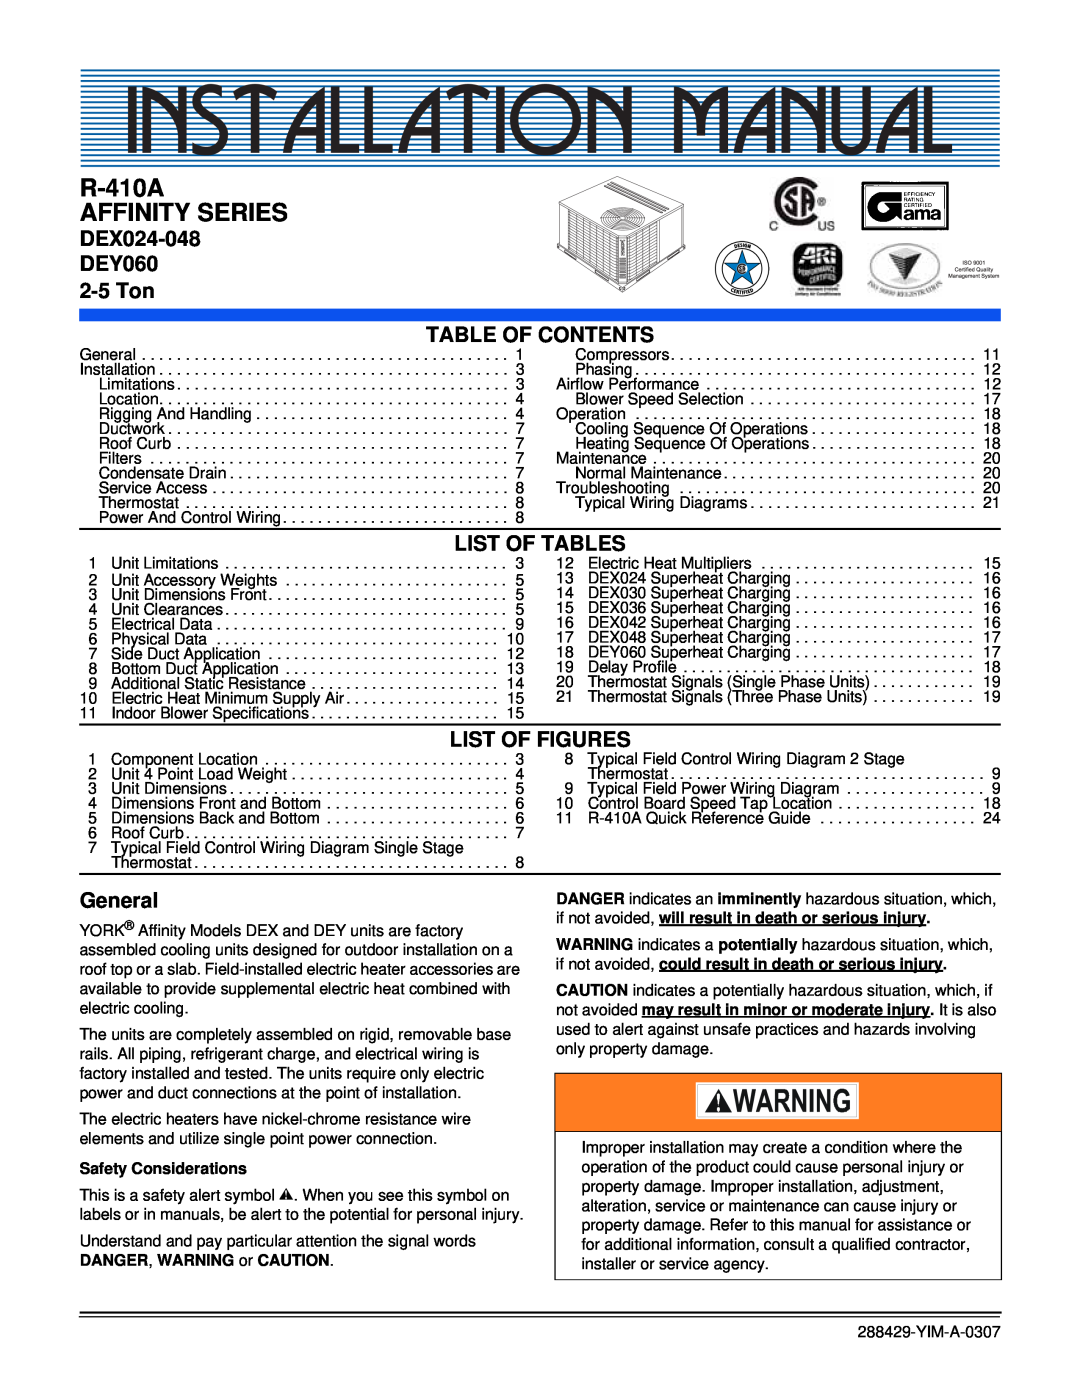 York manual Description, TECHNICAL GUIDE R-410A ZF SERIES 6-1/2- 12-1/2TON, Hertz, YTG-F-1210 